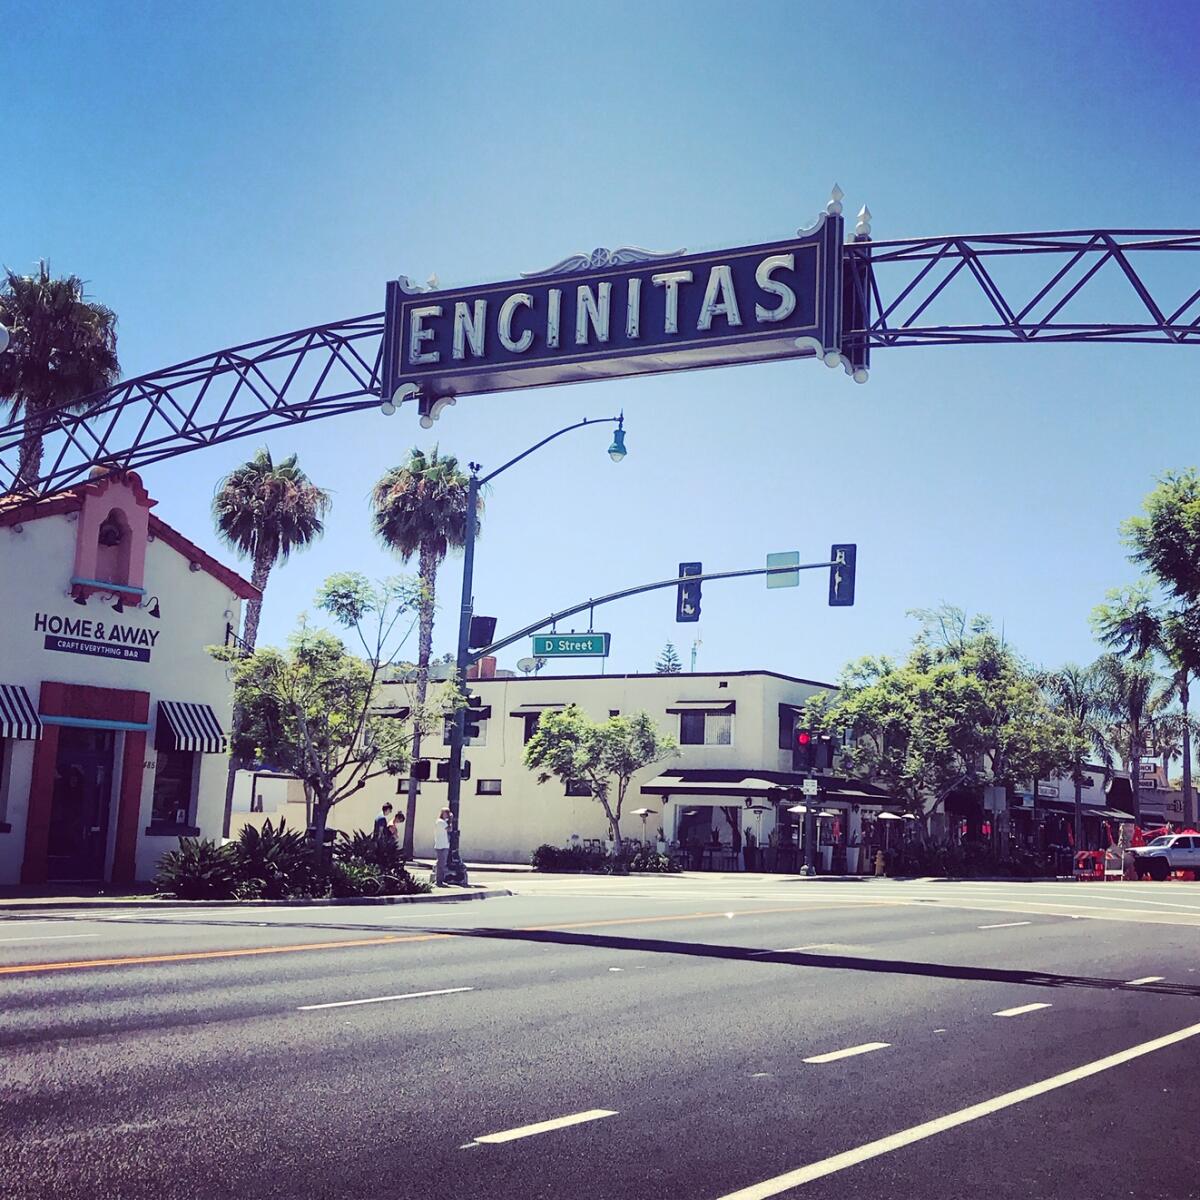 City of Encinitas banner